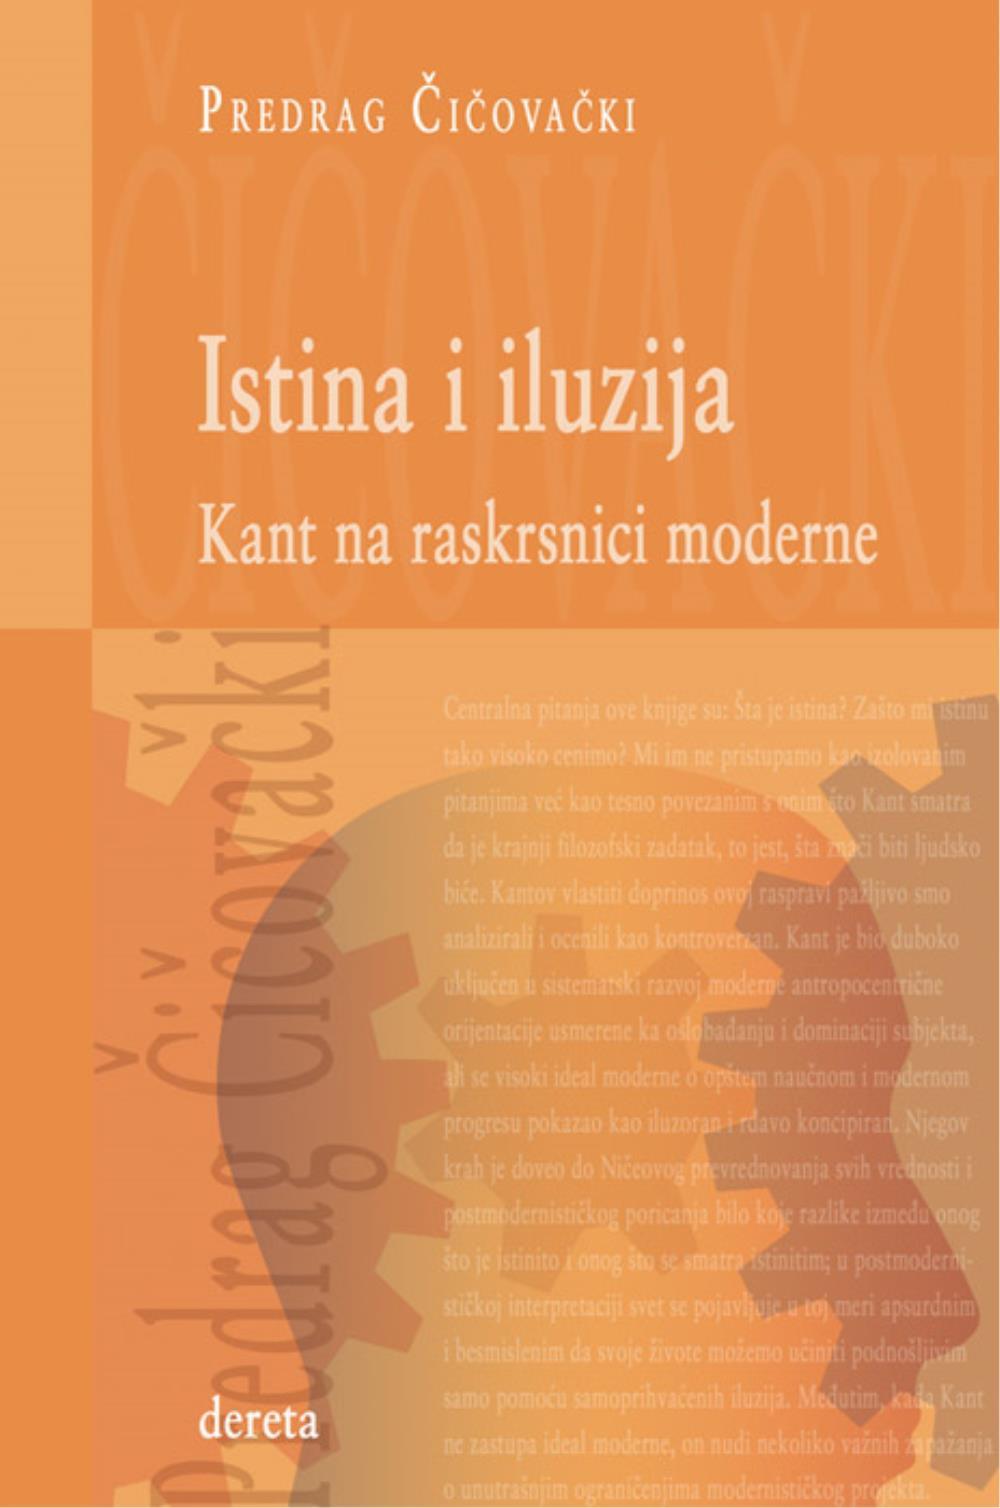 Selected image for Istina i iluzija - Predrag Čičovački